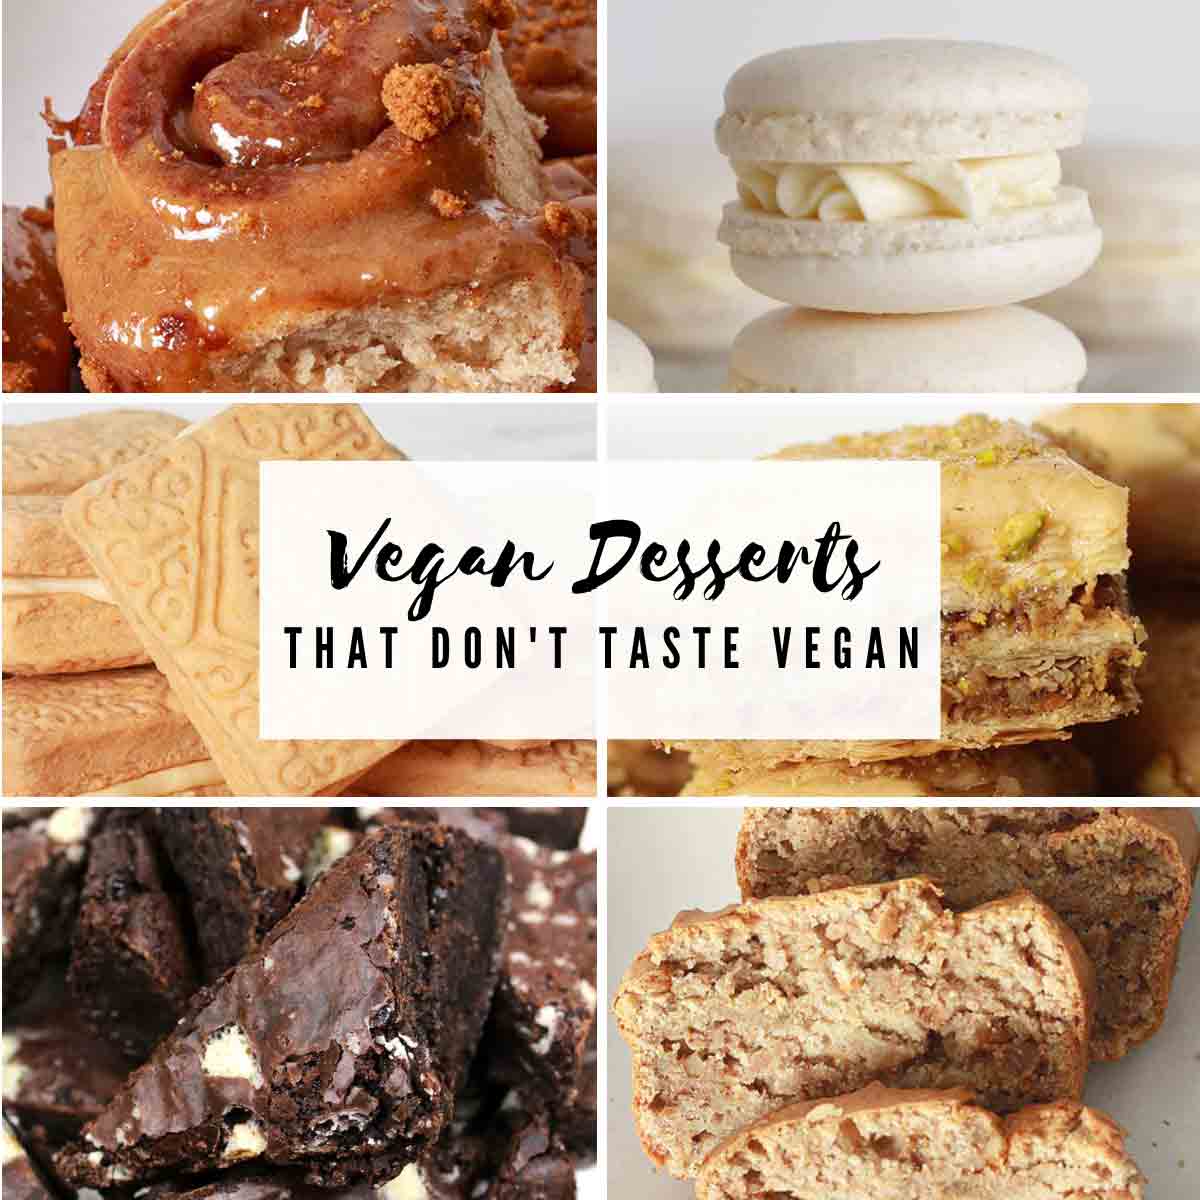 Dessert Images With Text That Reads 'vegan Desserts That Dont Taste Vegan'